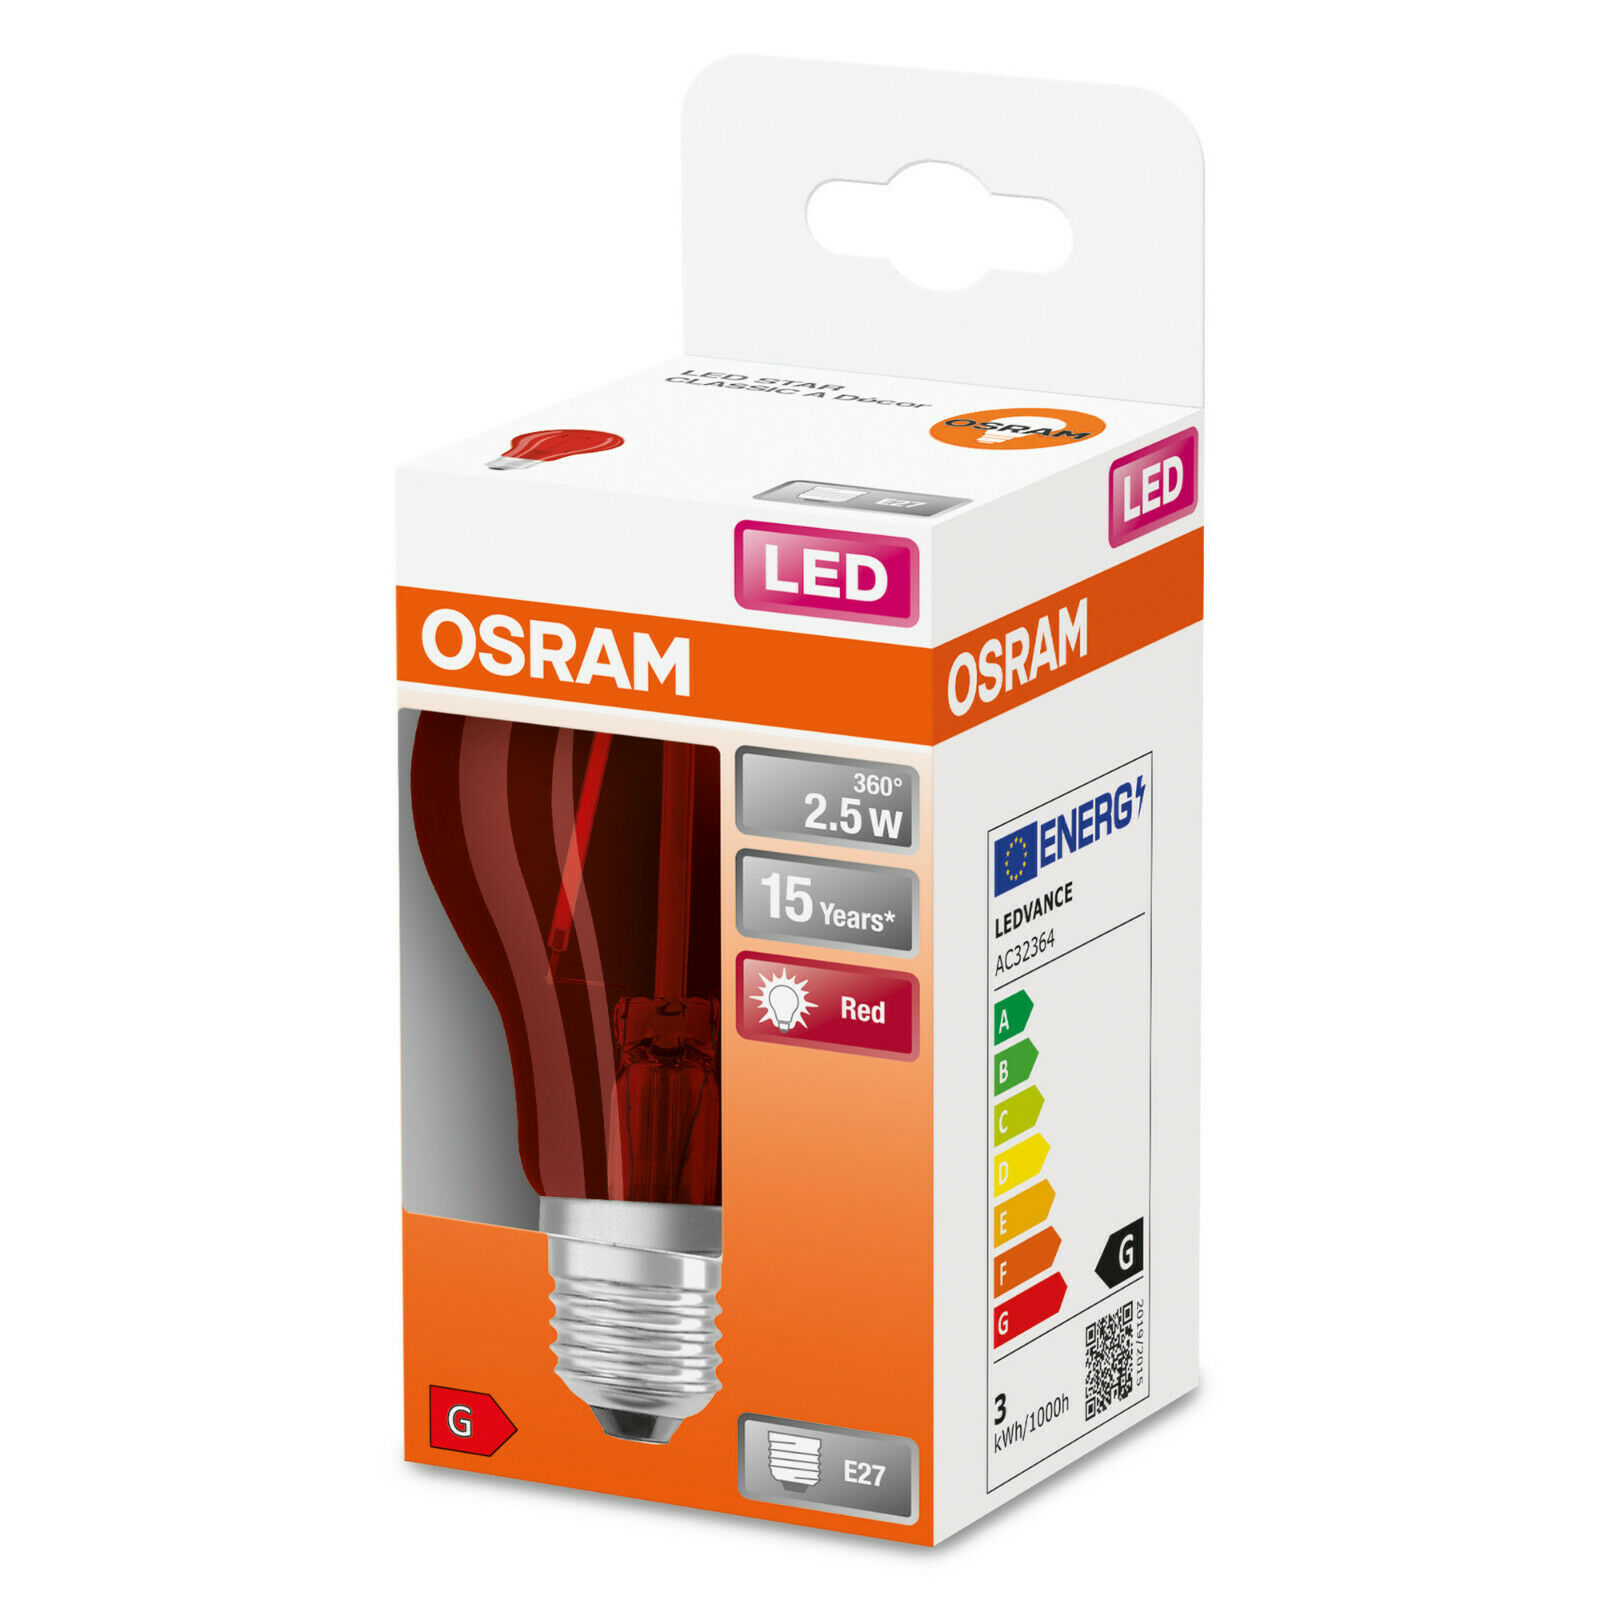 Osram LED rote Filamentlampe Birnenform 2,5 Watt E27 